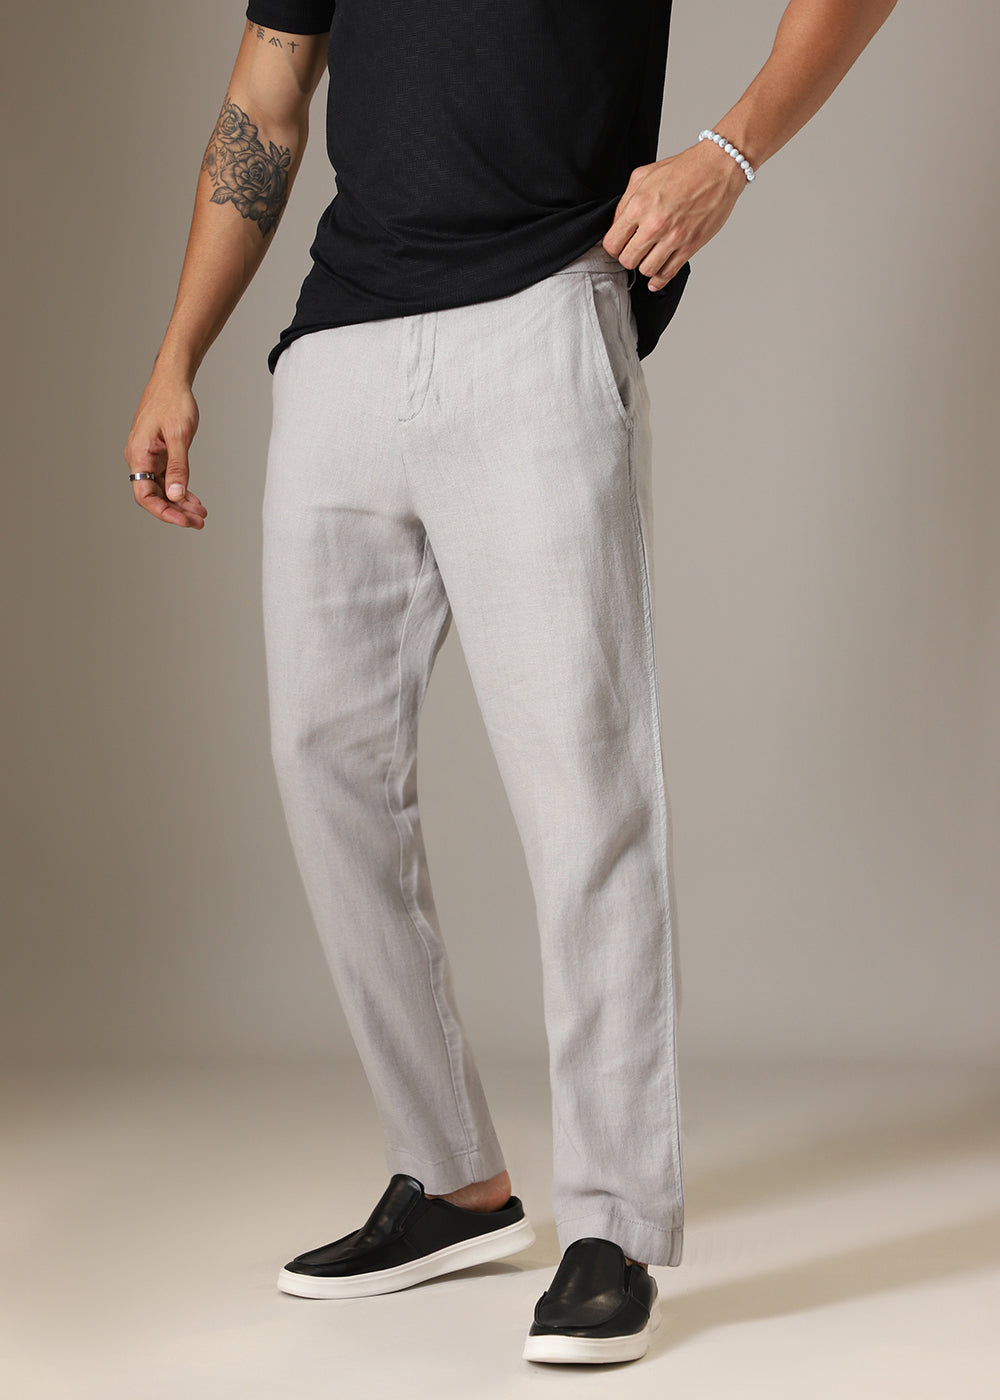 Gravel Grey Linen Pant